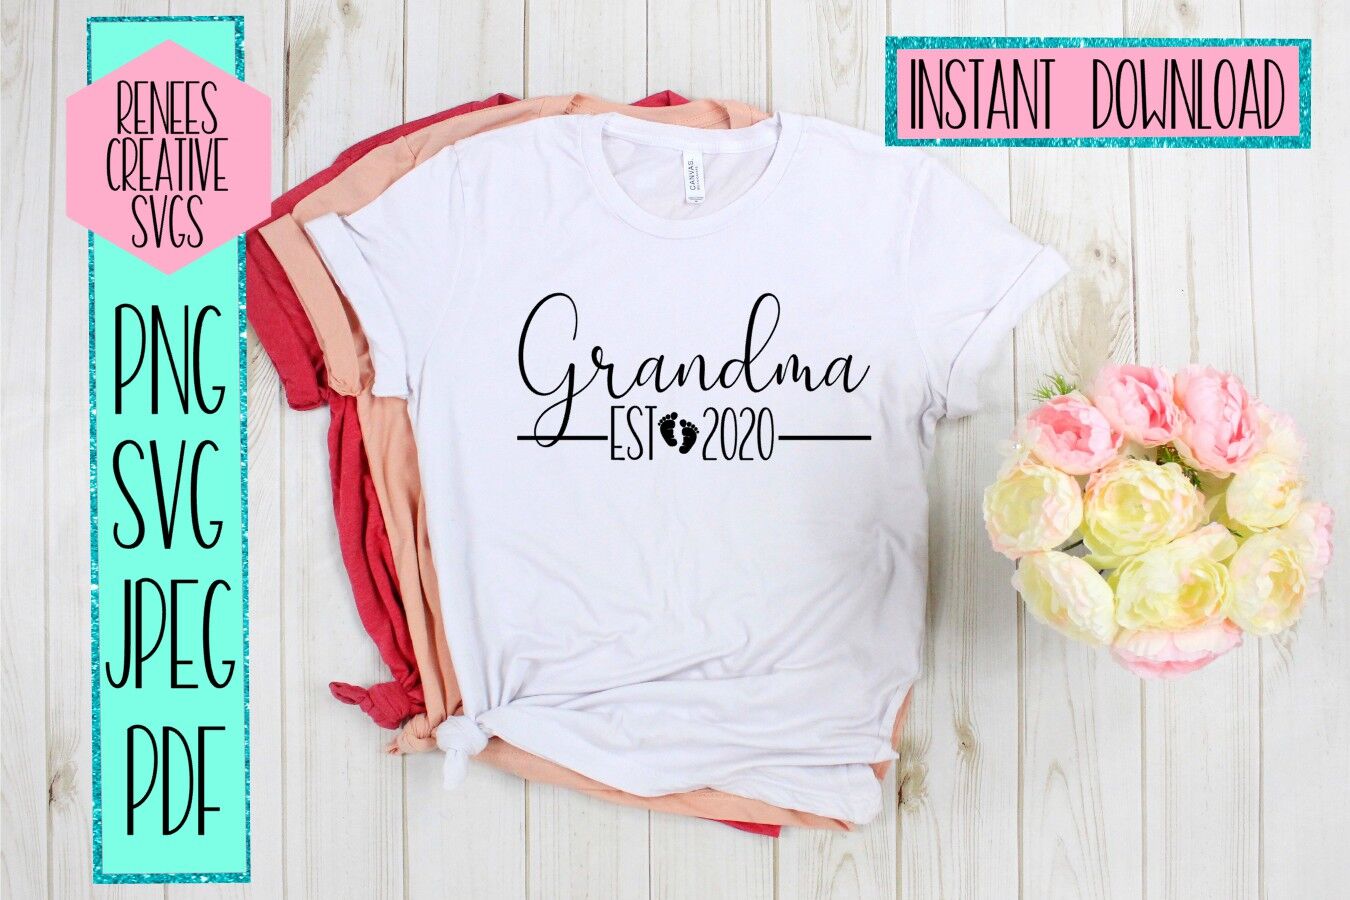 Download Grandma Est 2020 New Grandparents Svg Cut File By Renee S Creative Svg S Thehungryjpeg Com